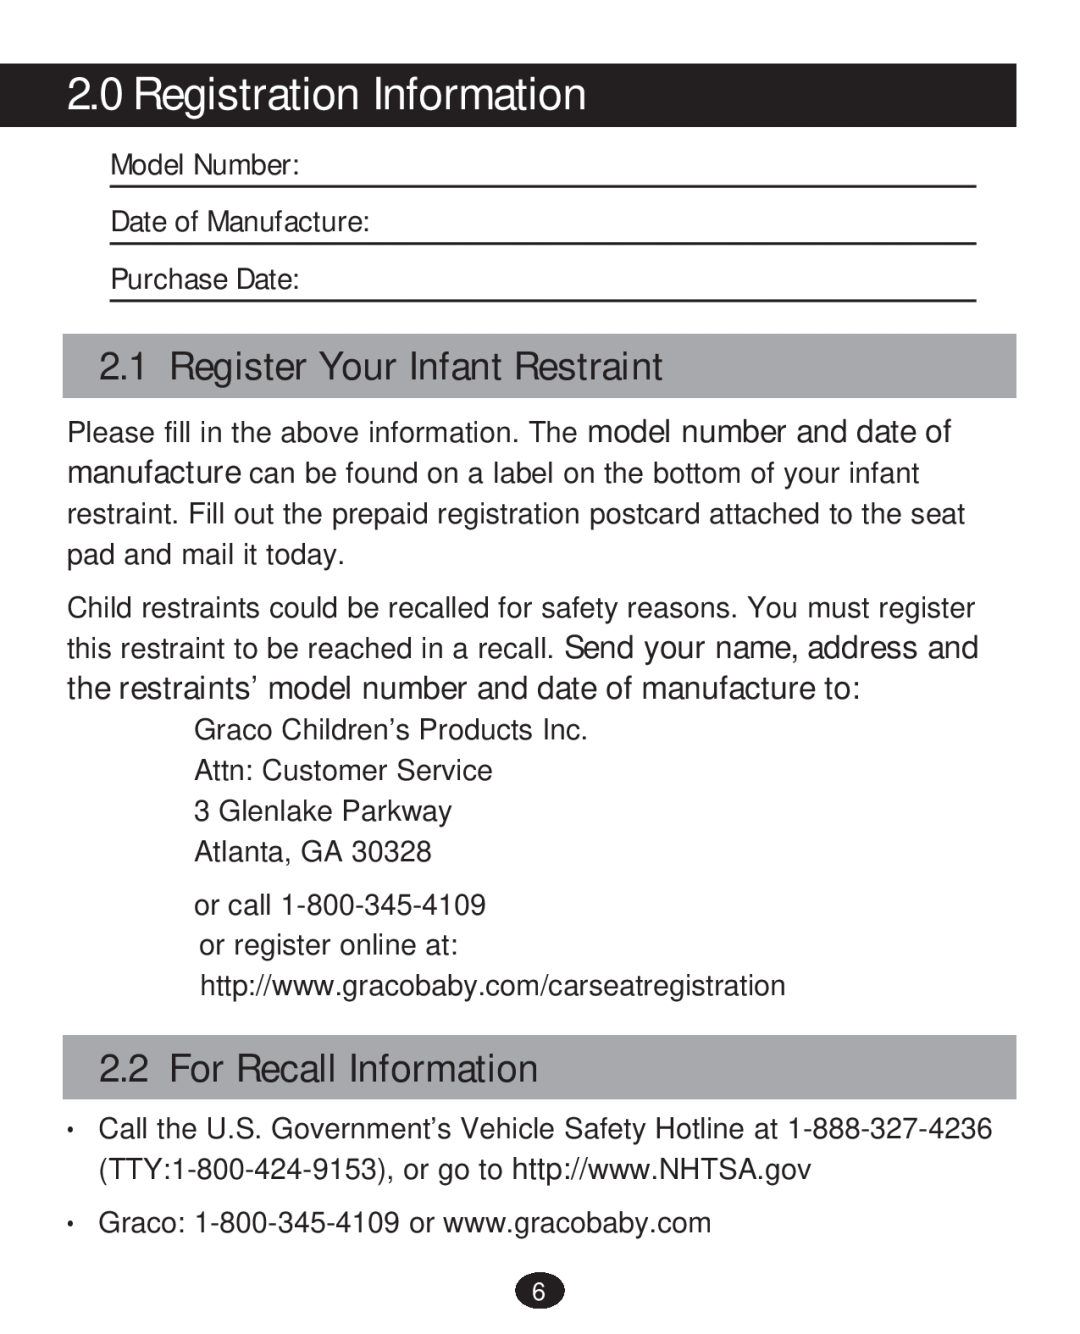 Graco 30 manual Registration Information, Register Your Infant Restraint, For Recall Information 